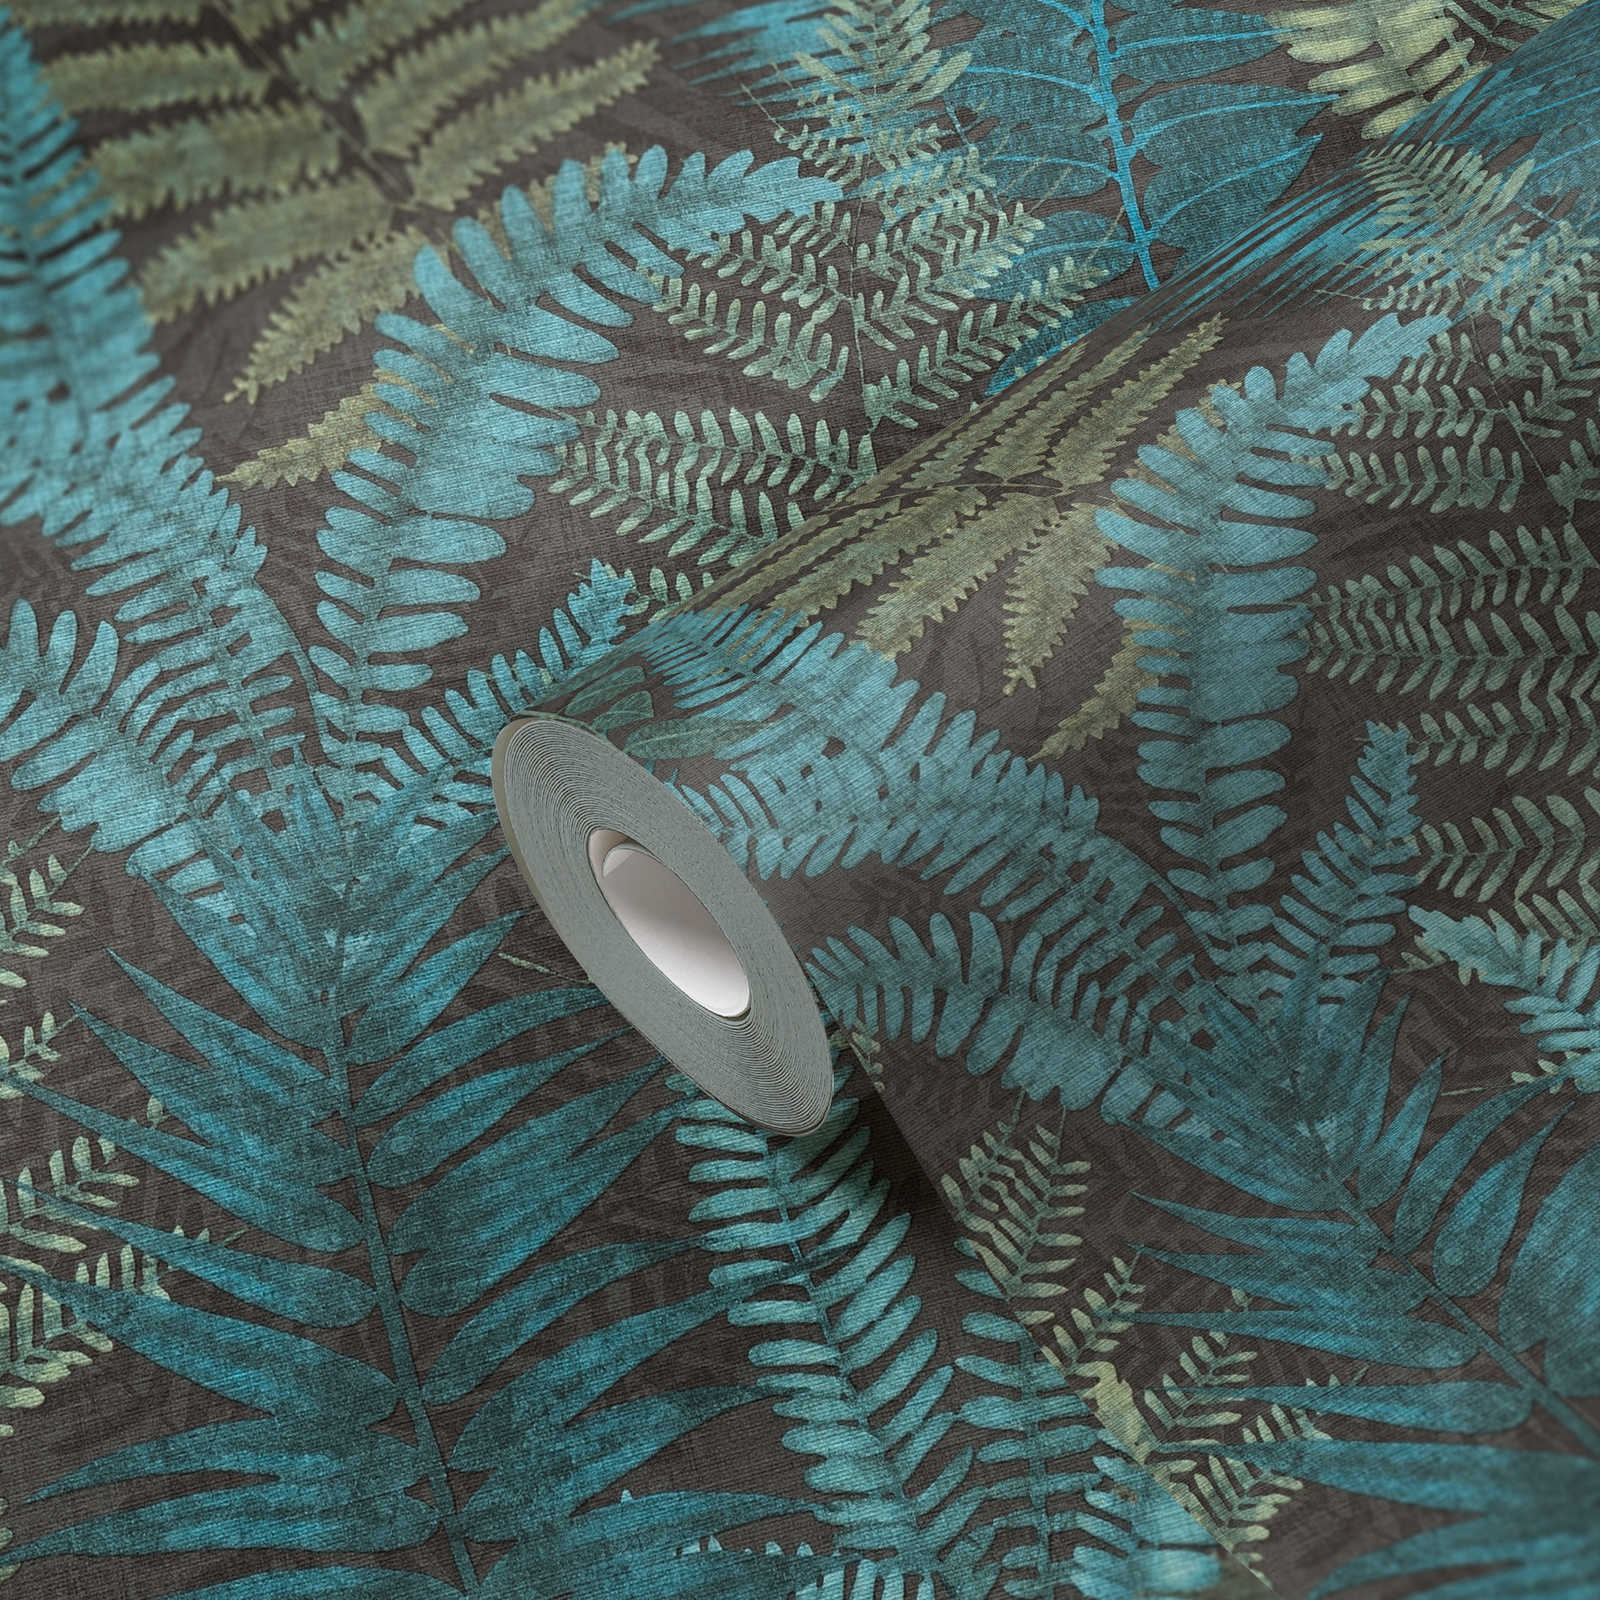             Non-woven wallpaper floral with fern leaves light textured, matt - black, blue, green
        